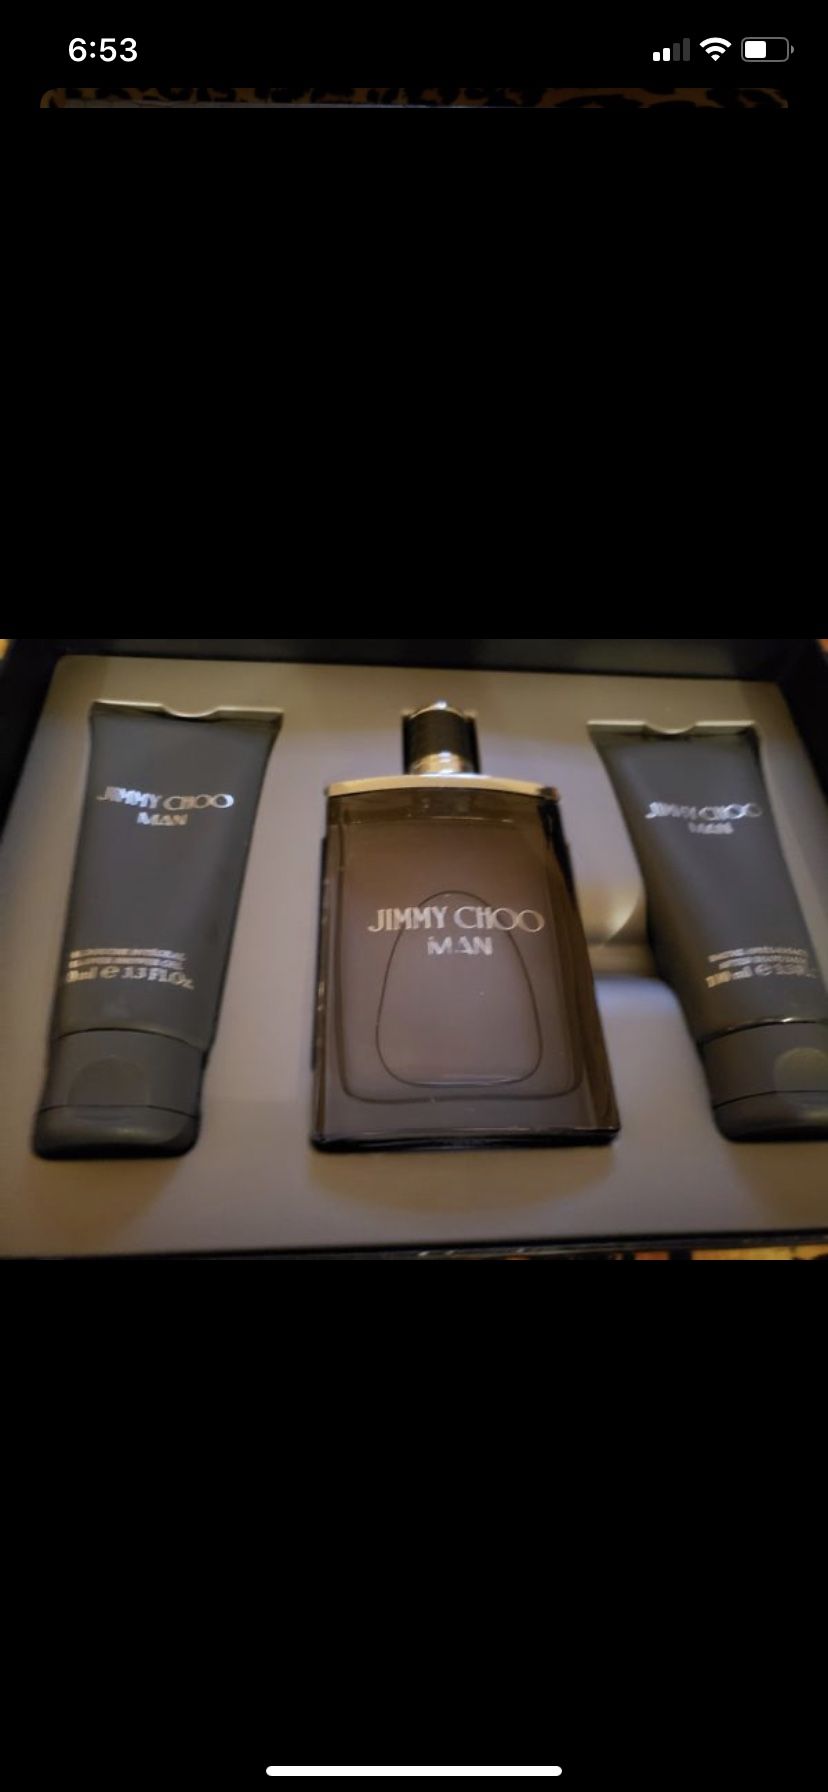 Jimmy choo perfume set for men.